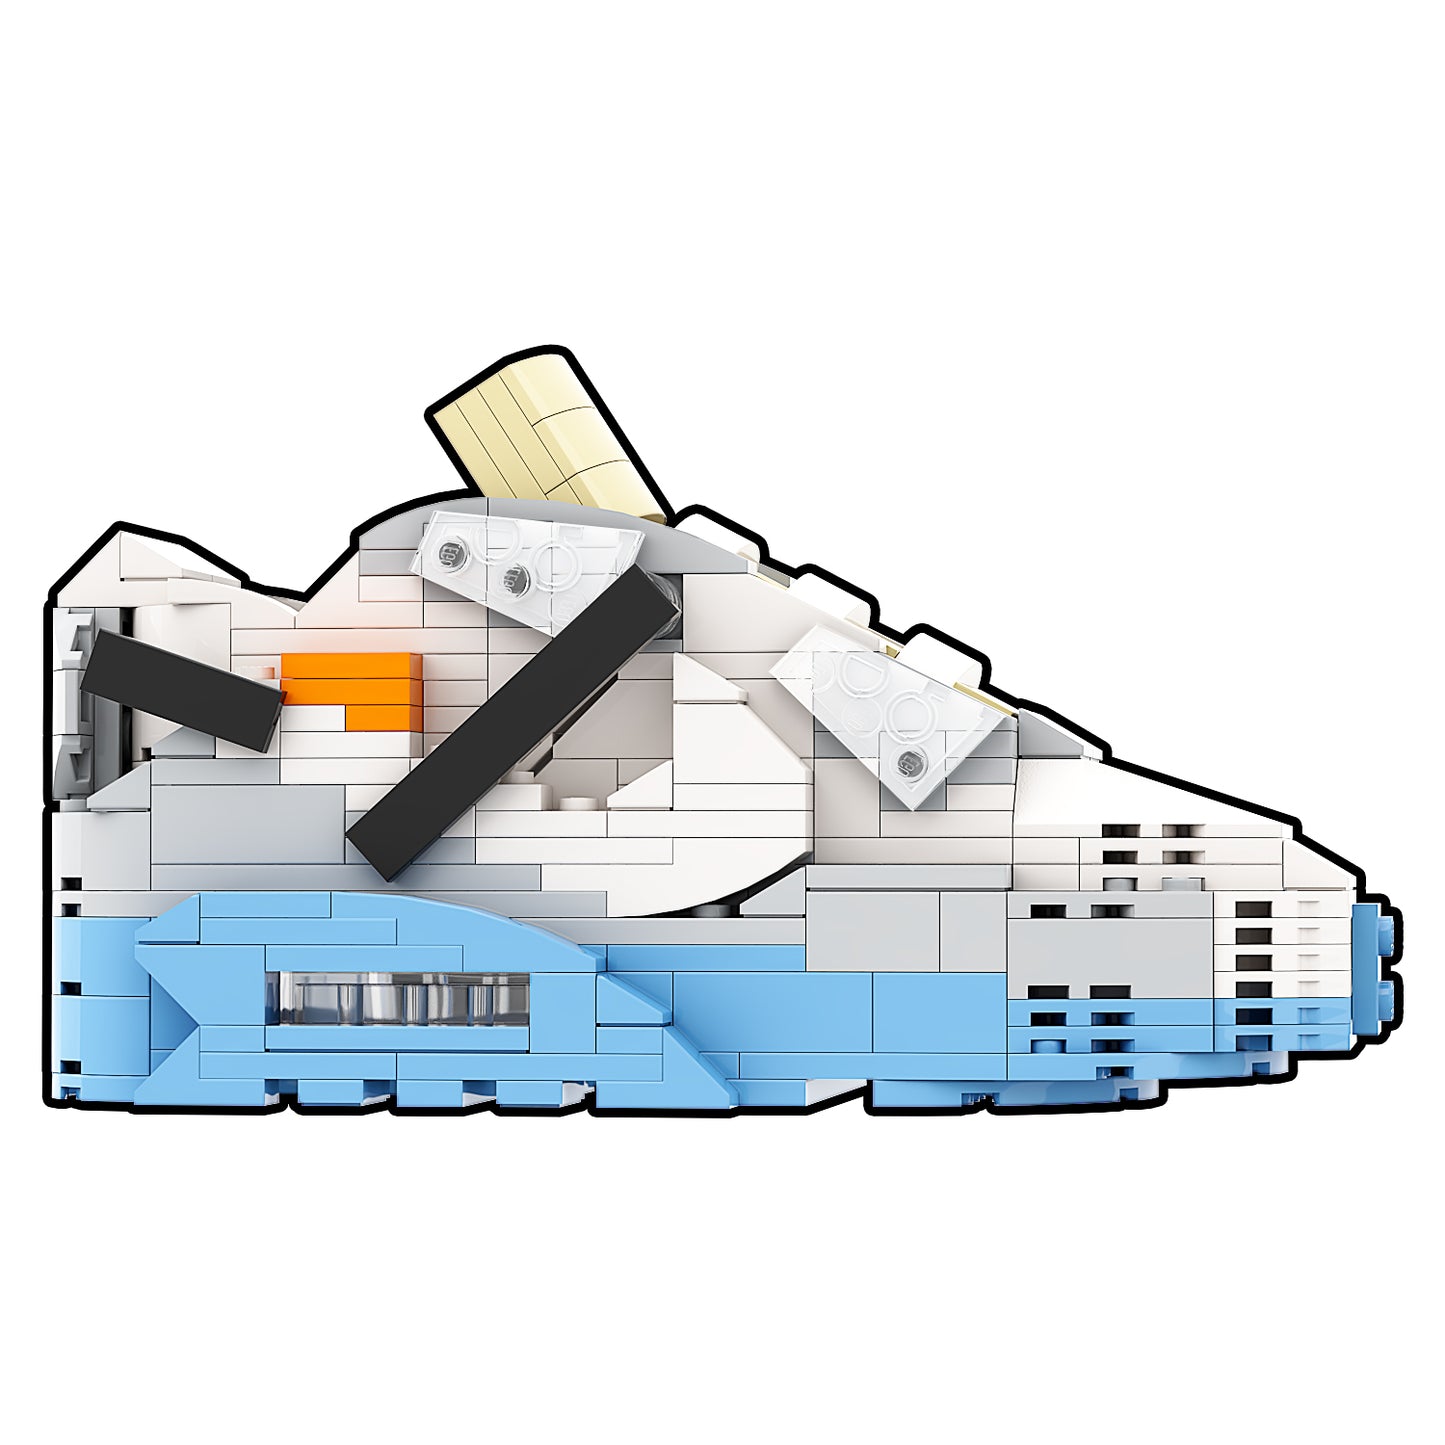 REGULAR Air Max 90 "Off-White White" Sneaker Bricks with Mini Figure